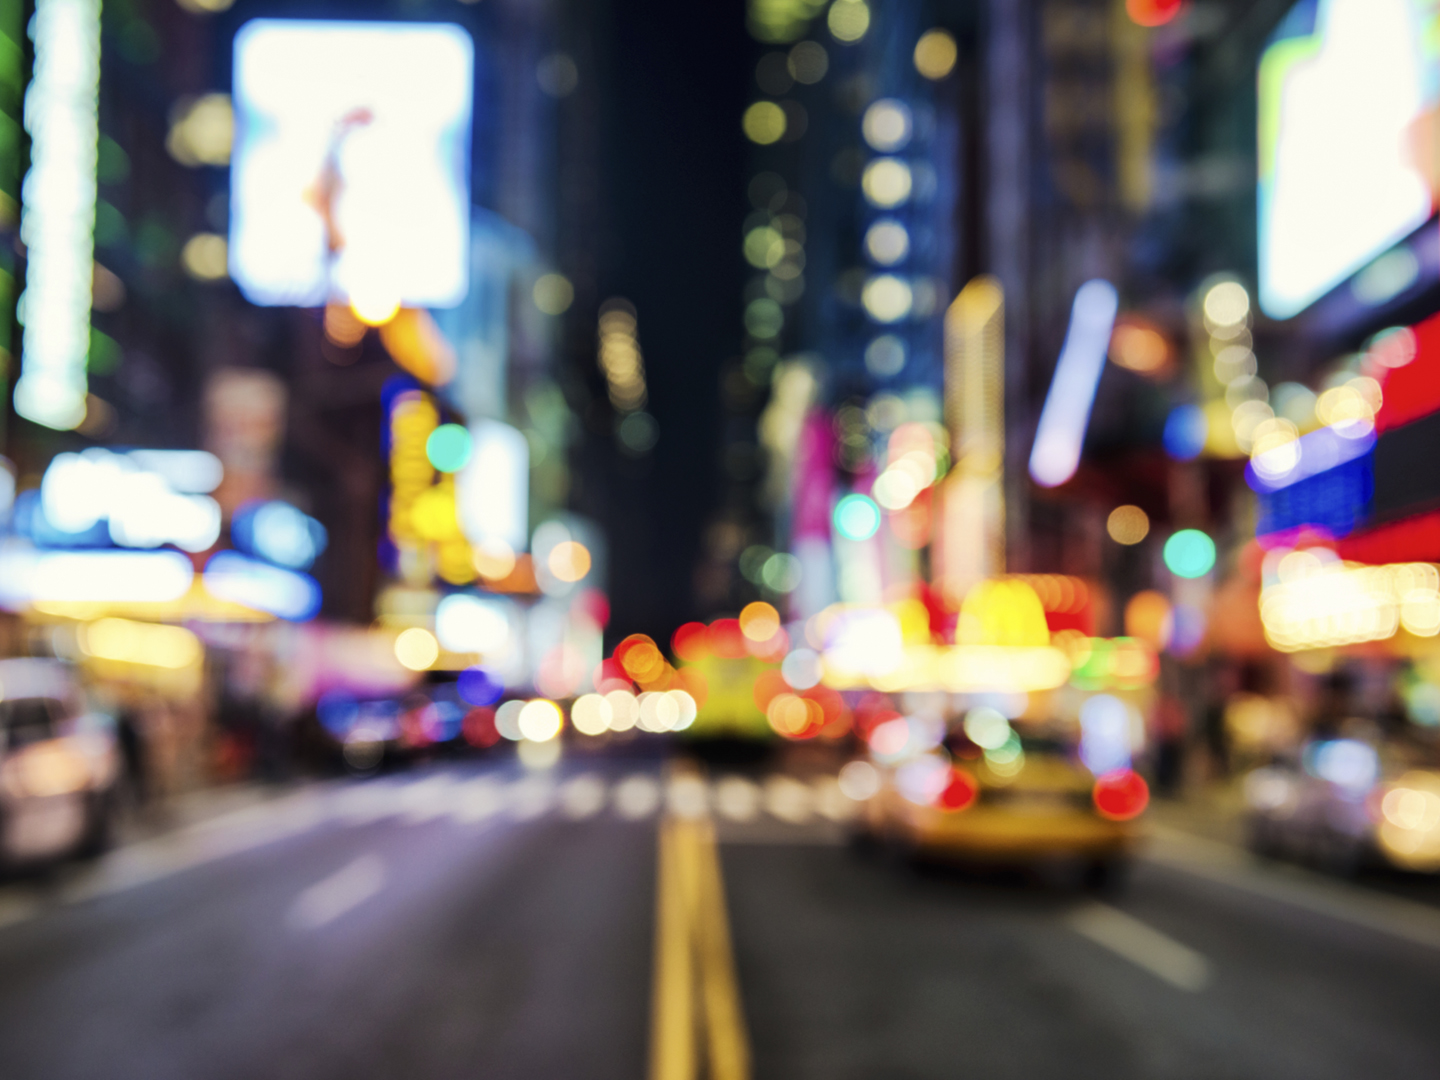 Blurred street illumination and night lights of New York City